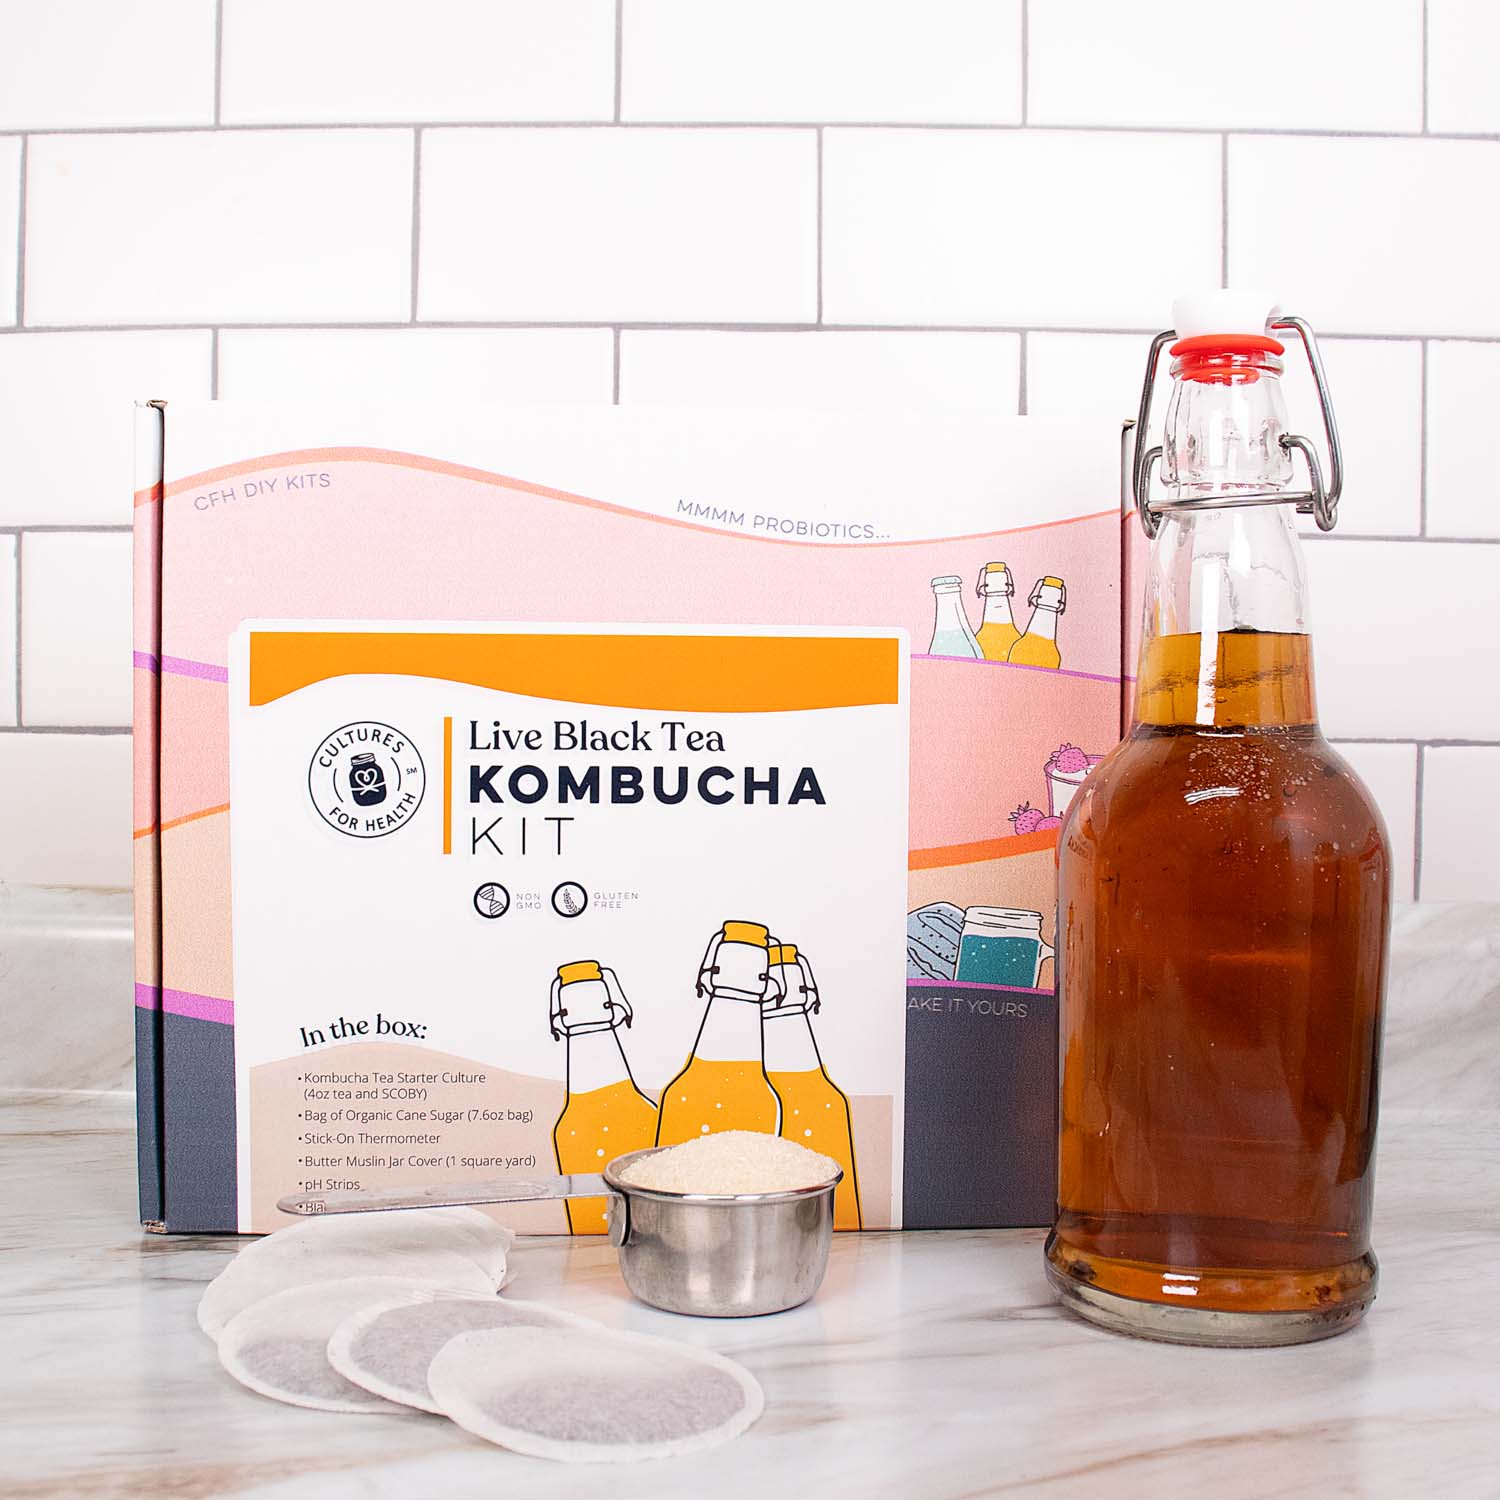 Cultures for Health Kombucha Kit